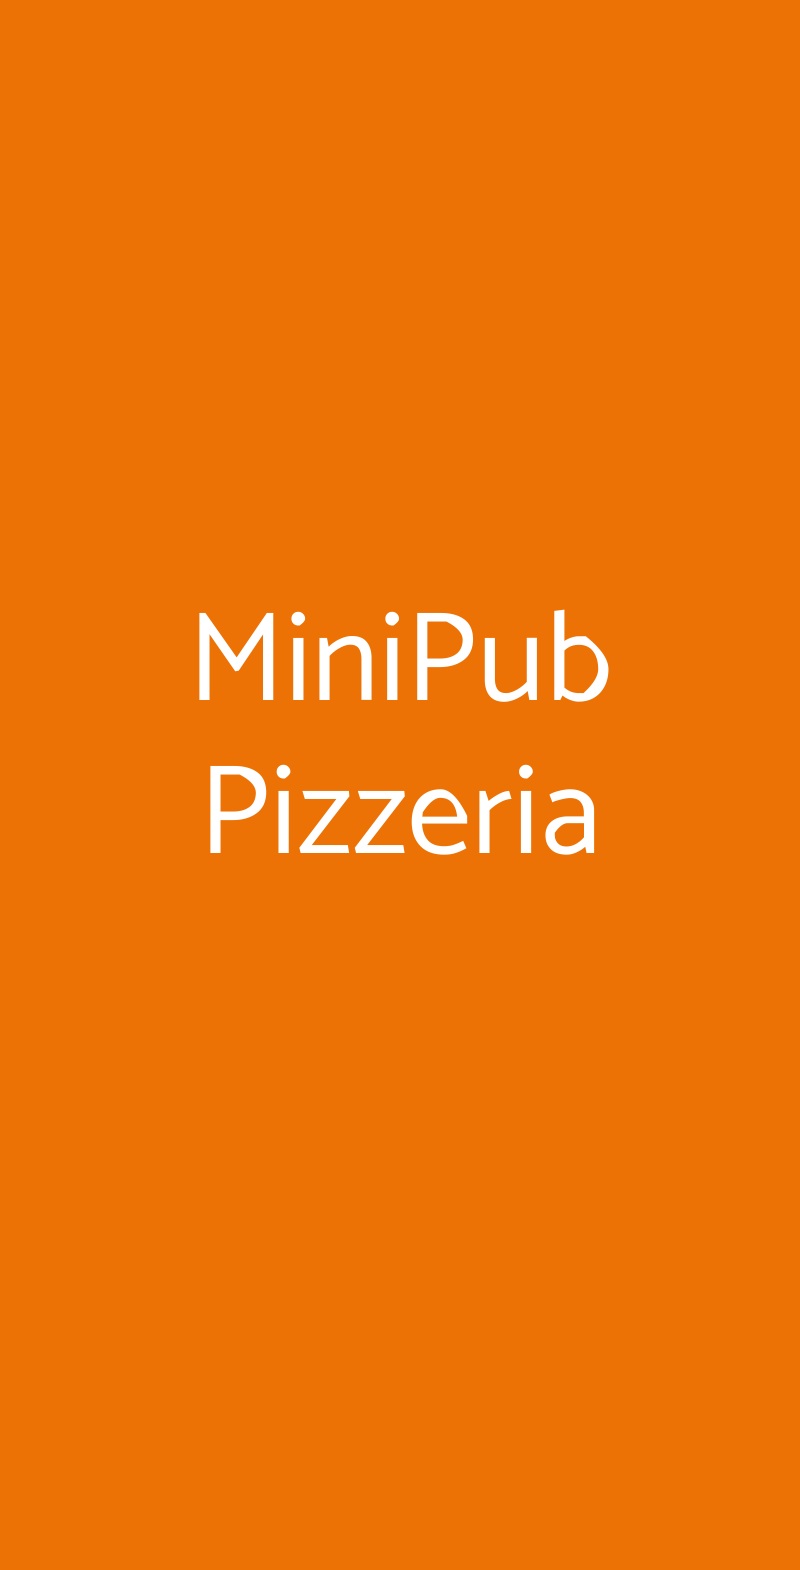 MiniPub Pizzeria Roma menù 1 pagina